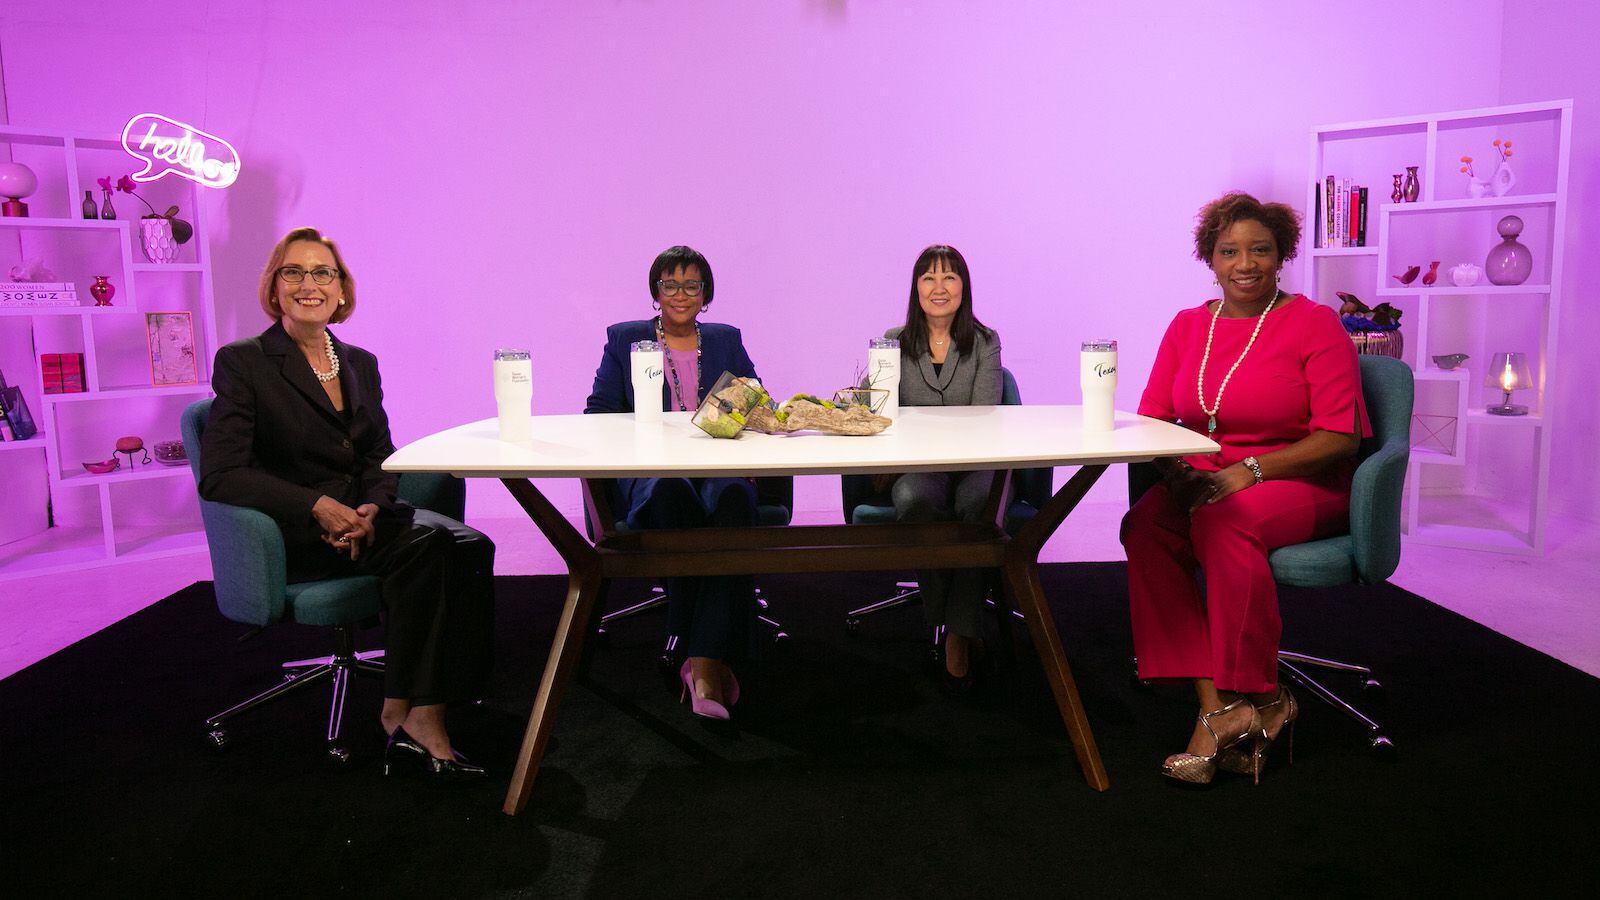 Roslyn Dawson Thompson, Cynt Marshall, Bonnie Clinton and A. Shonn Brown hosted the Texas Women's Foundation 35th annual luncheon.